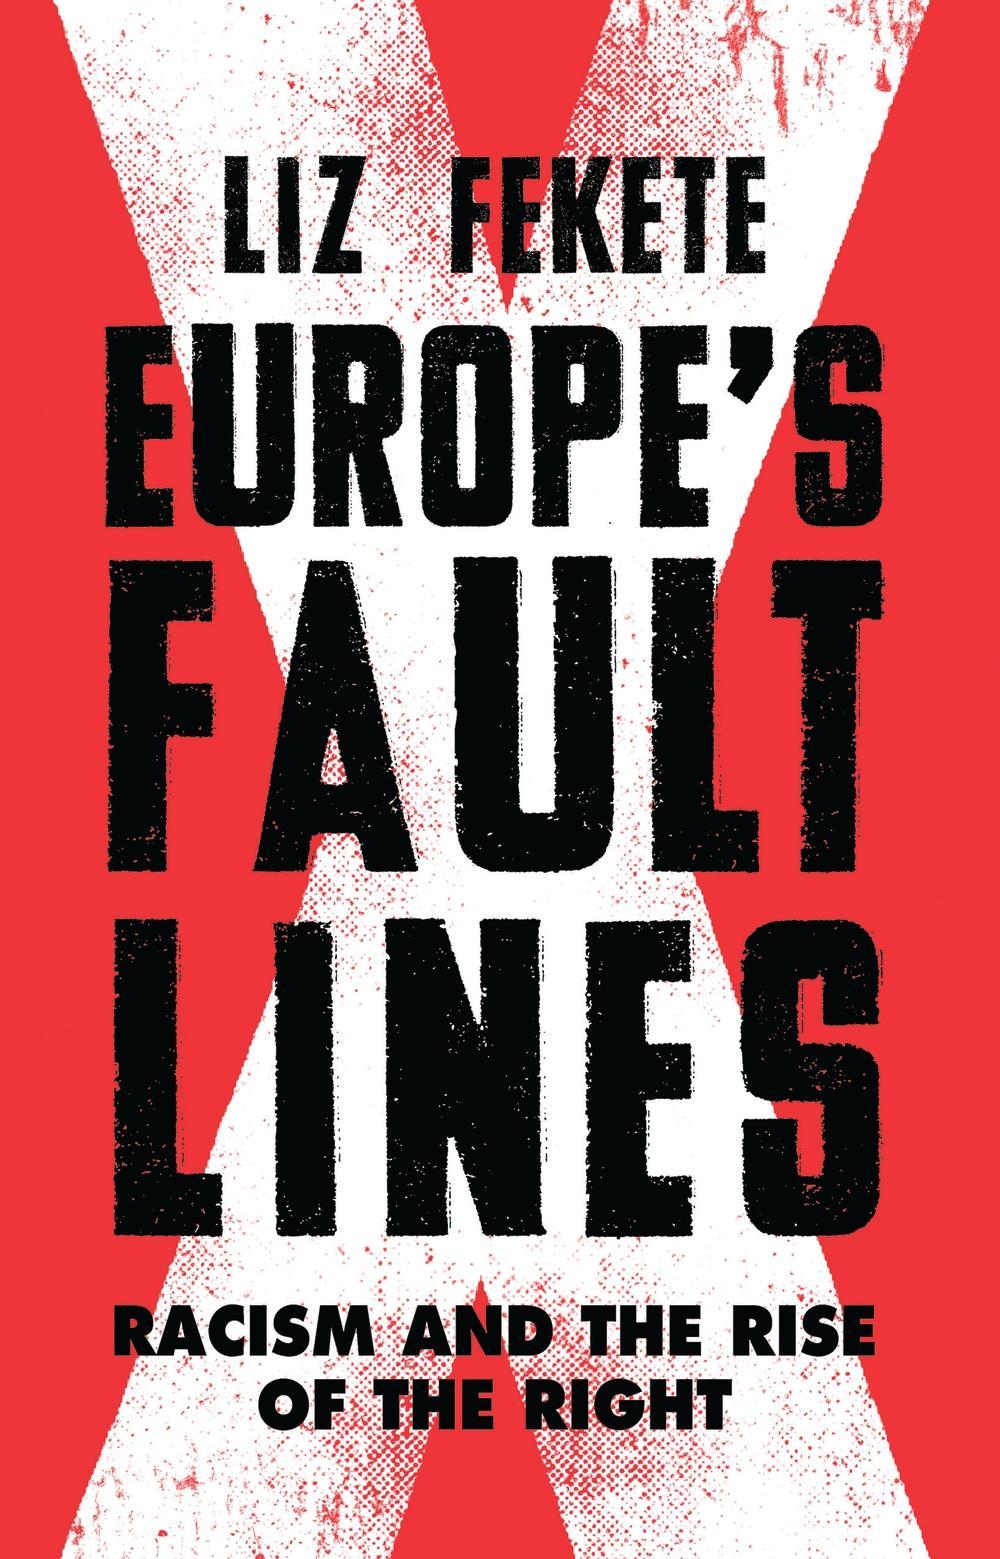 Europe's Fault Lines - Elizabeth Fekete